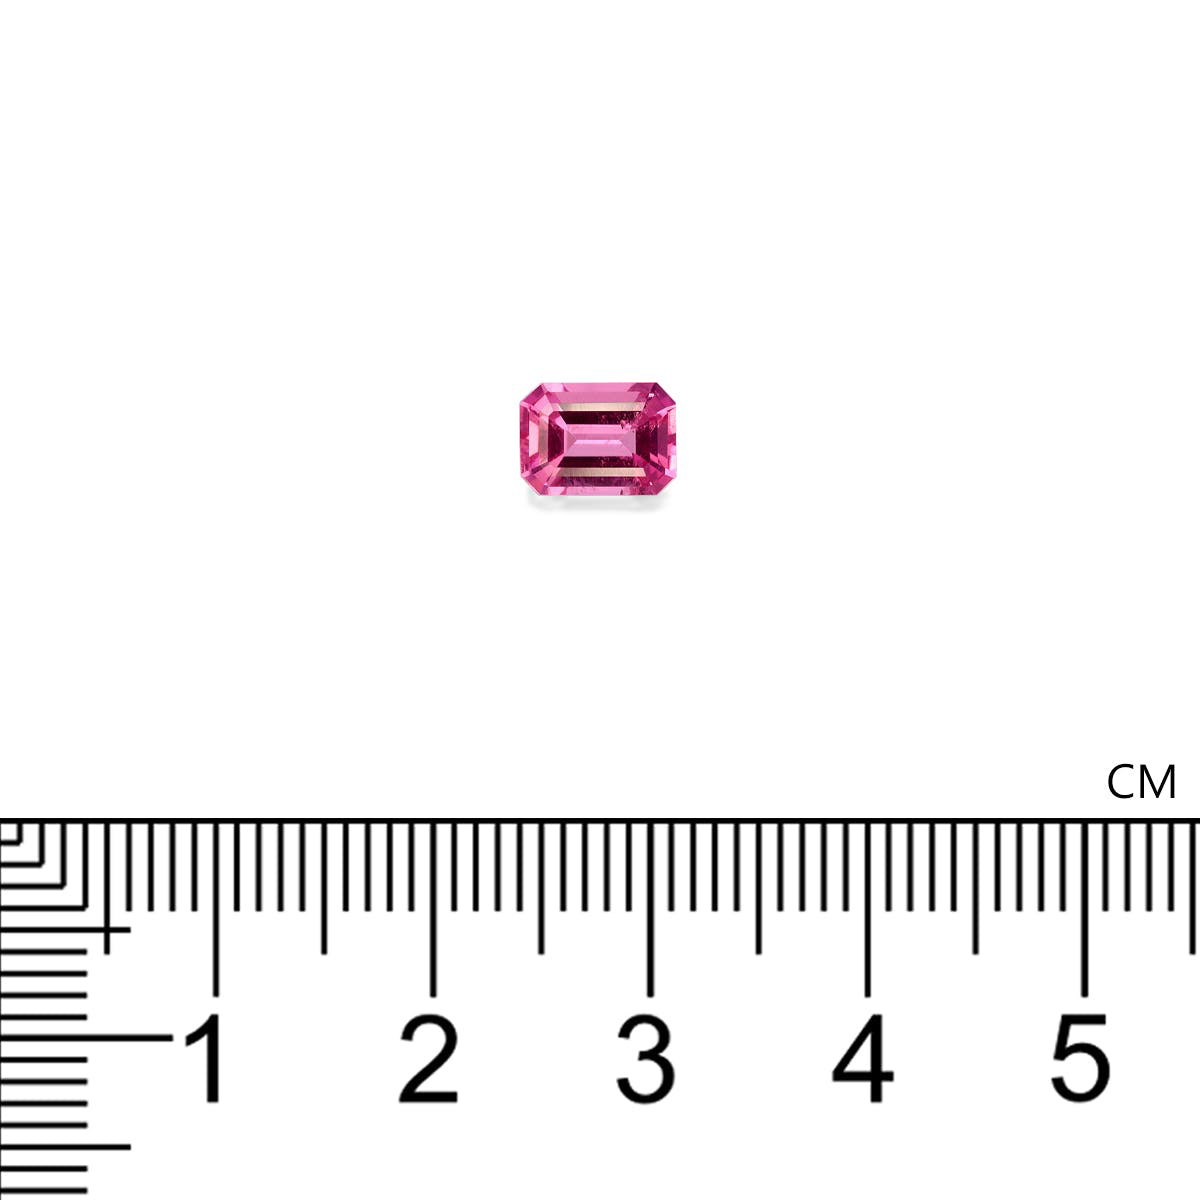 Picture of Fuscia Pink Rubellite Tourmaline 1.11ct - 7x5mm (RL1252)